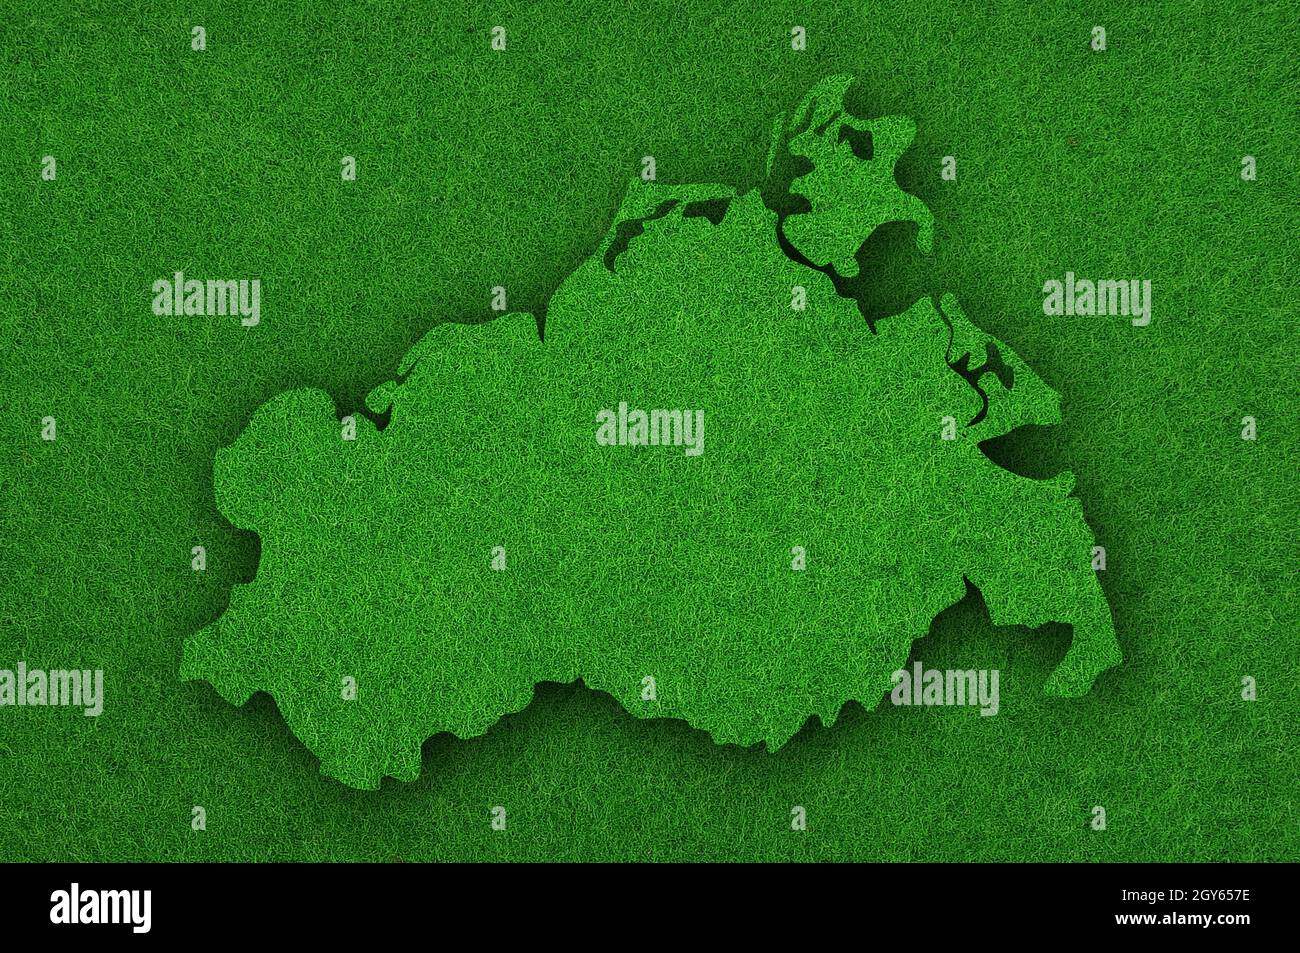 Map of Mecklenburg-Vorpommern on green felt Stock Photo